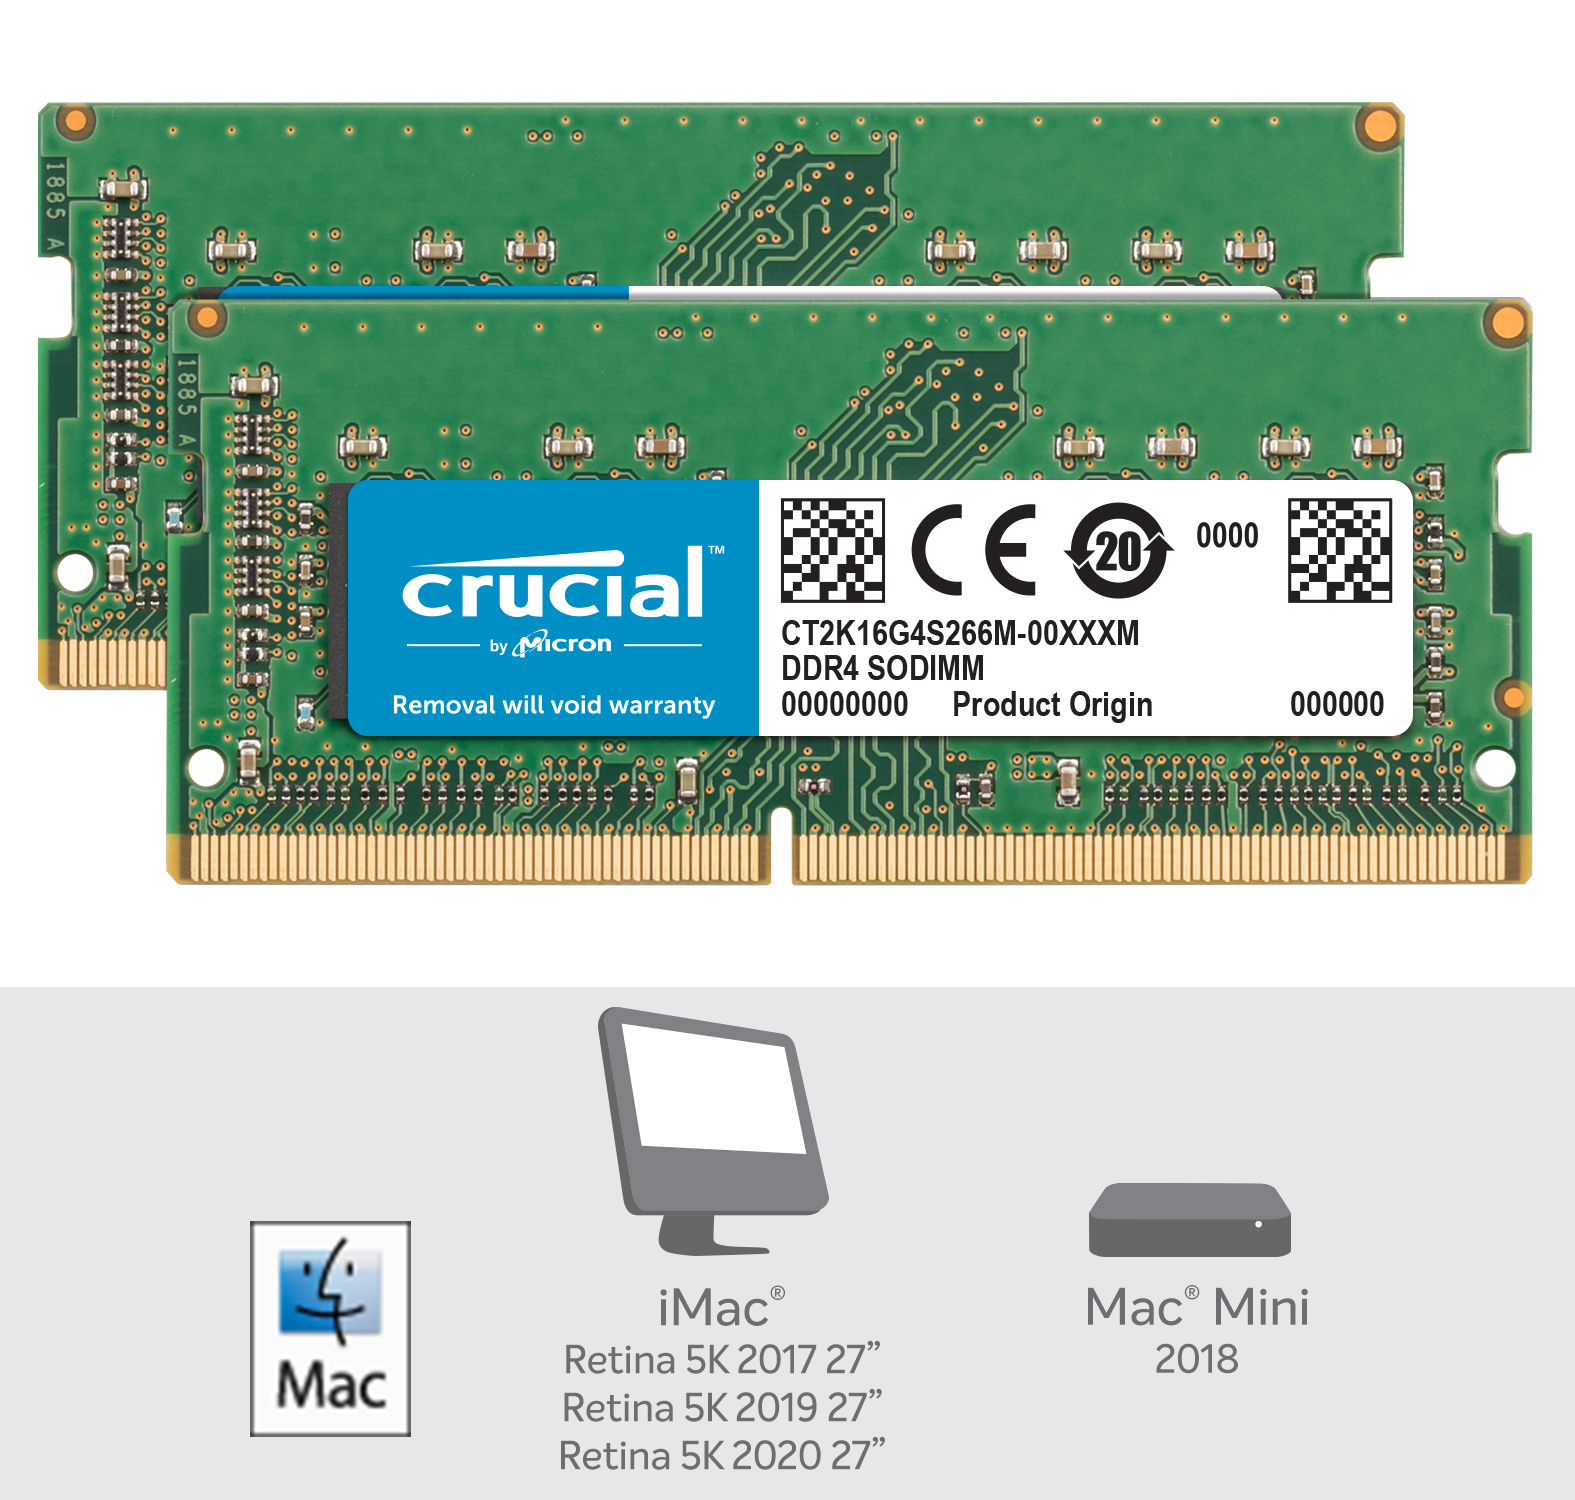 Analyse complète du Crucial RAM 32 Go DDR4 3200 MHz CL22